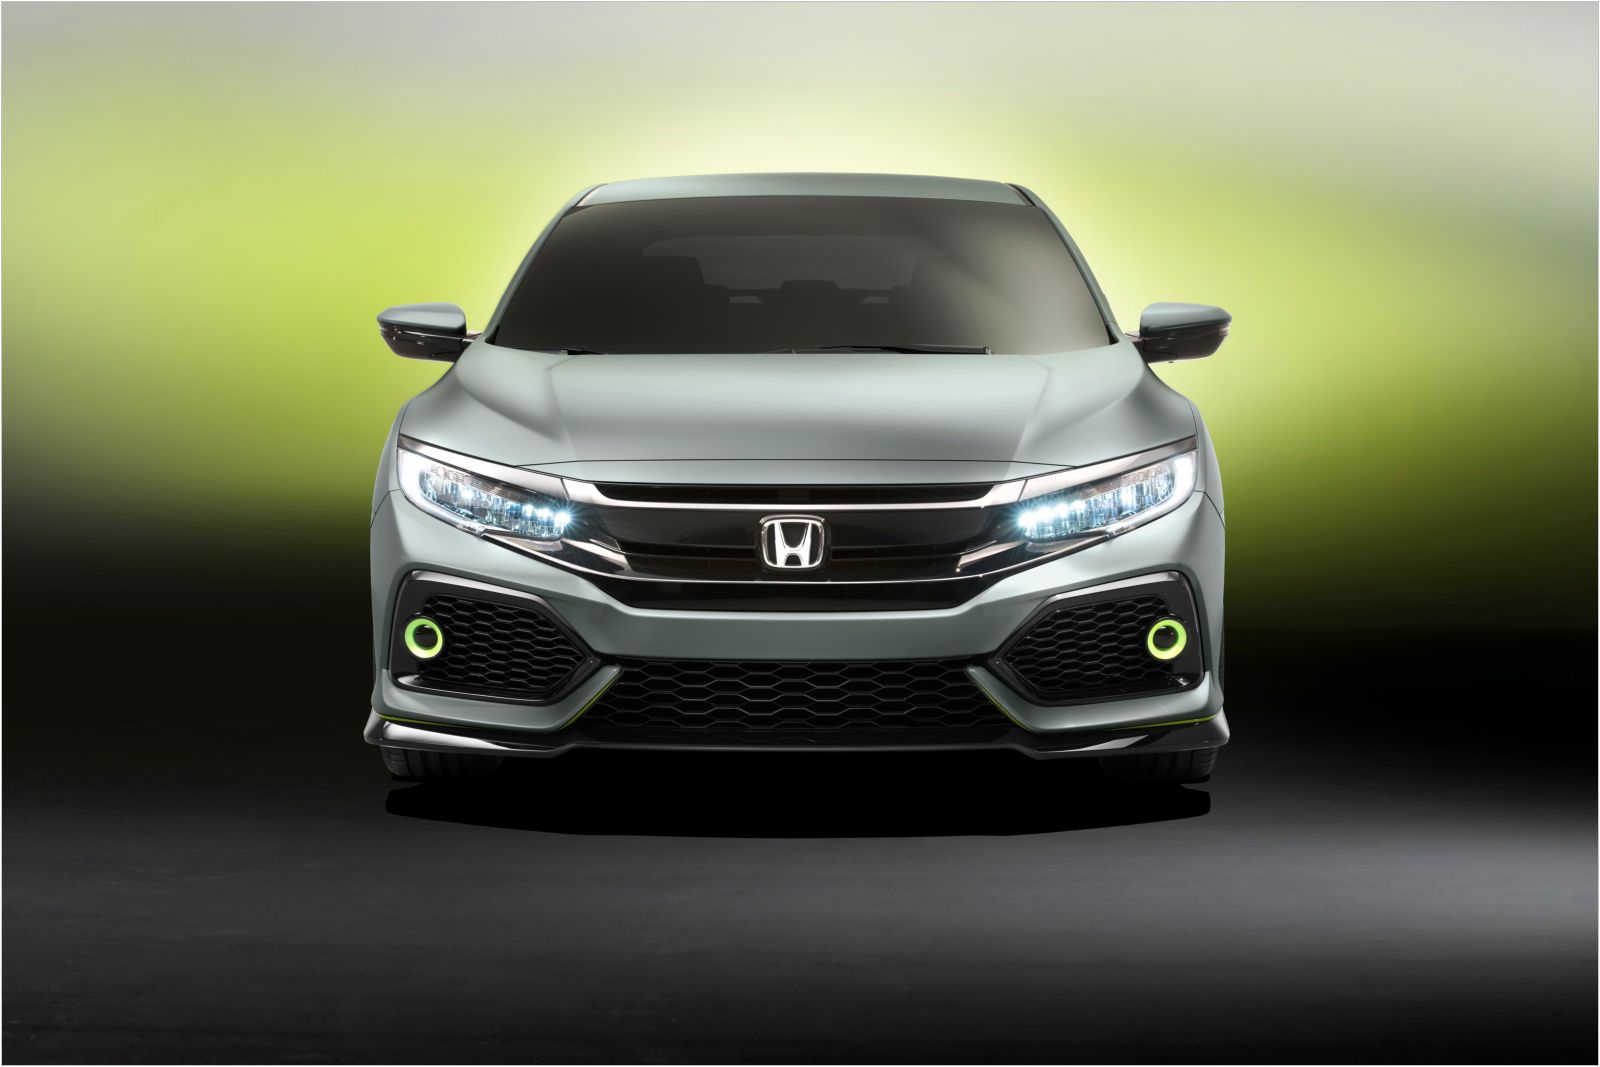 Honda Civic Hatchback Concept, 1600x1067px, img-3